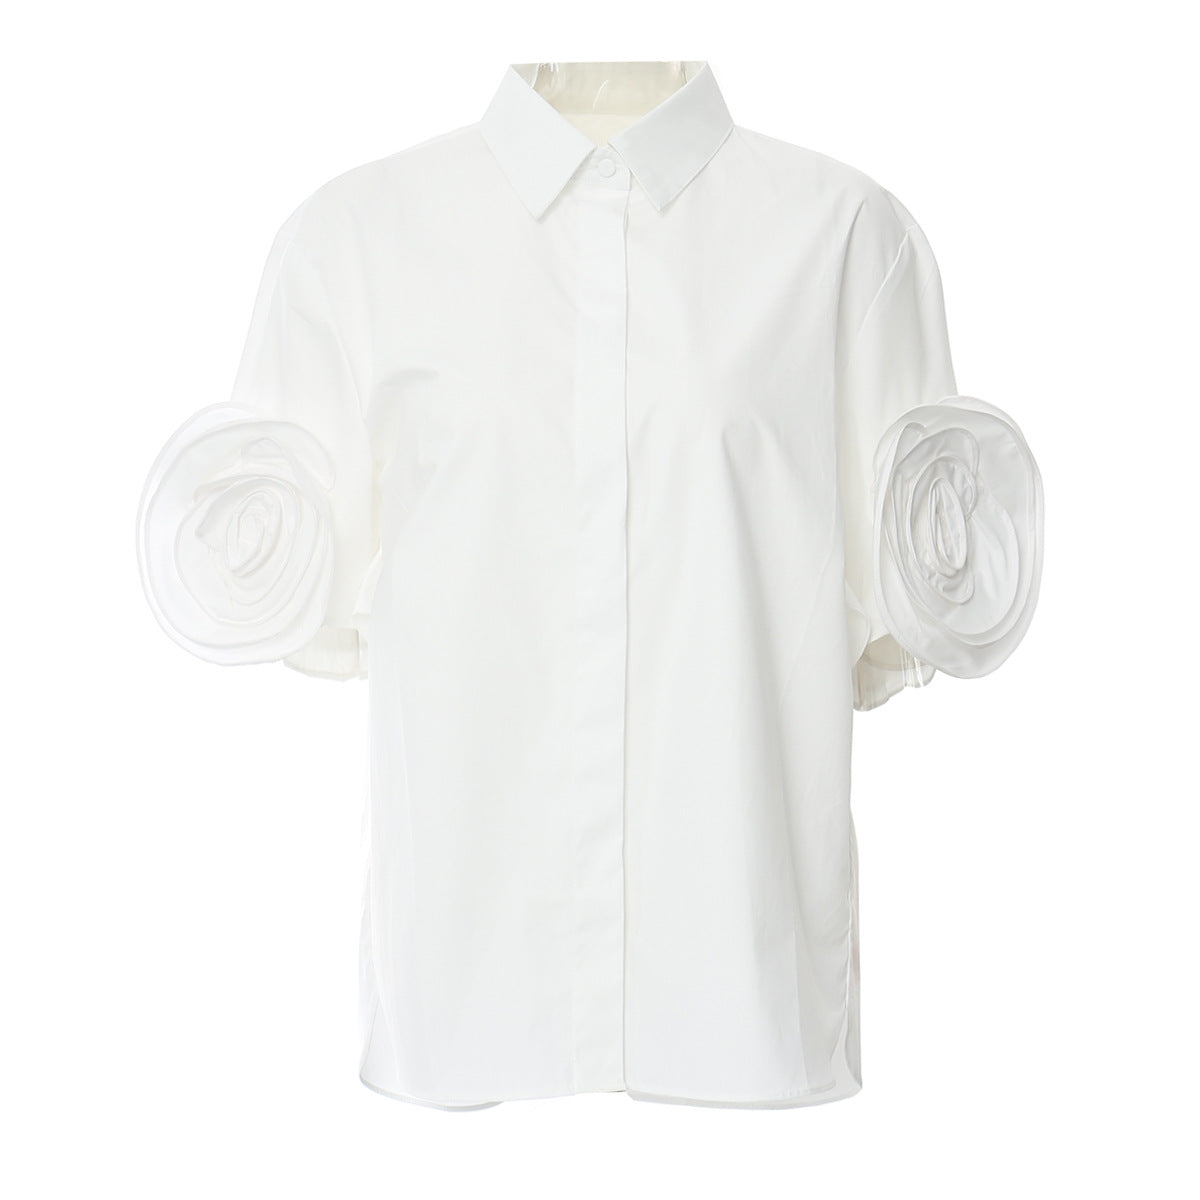 Spring Design Floral White Short Sleeved Shirt Women Niche Shirt Workplace Top